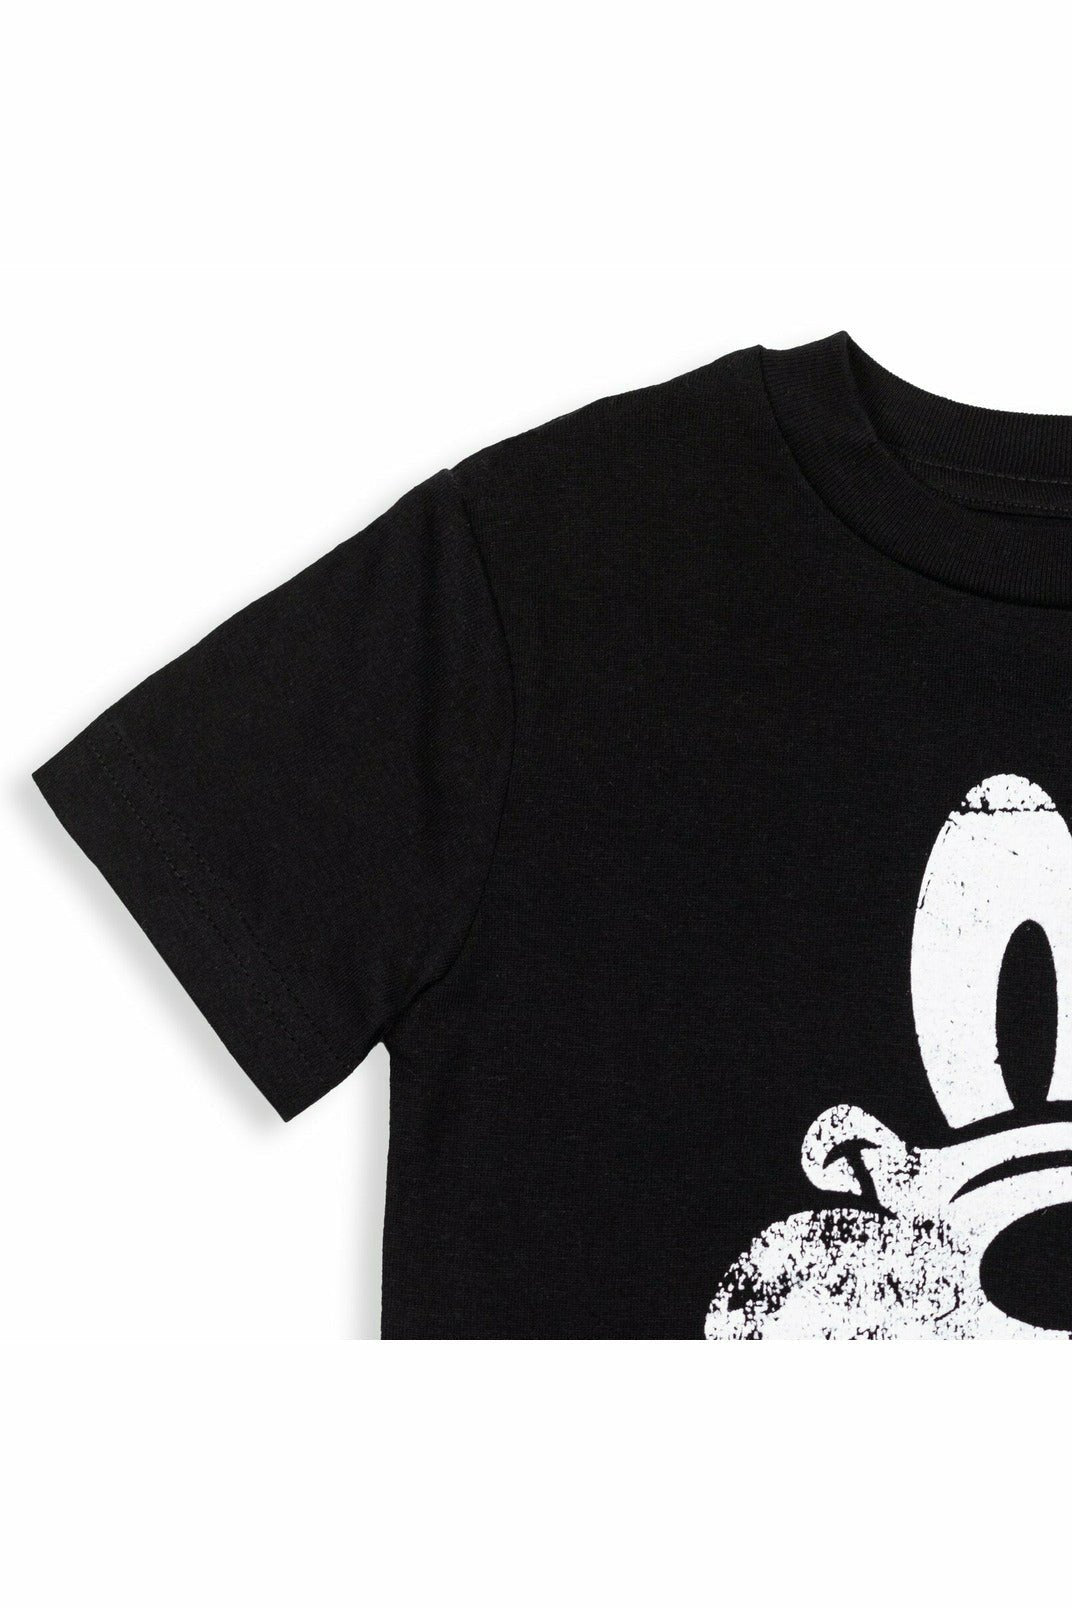 Disney Goofy Graphic T-Shirt - imagikids